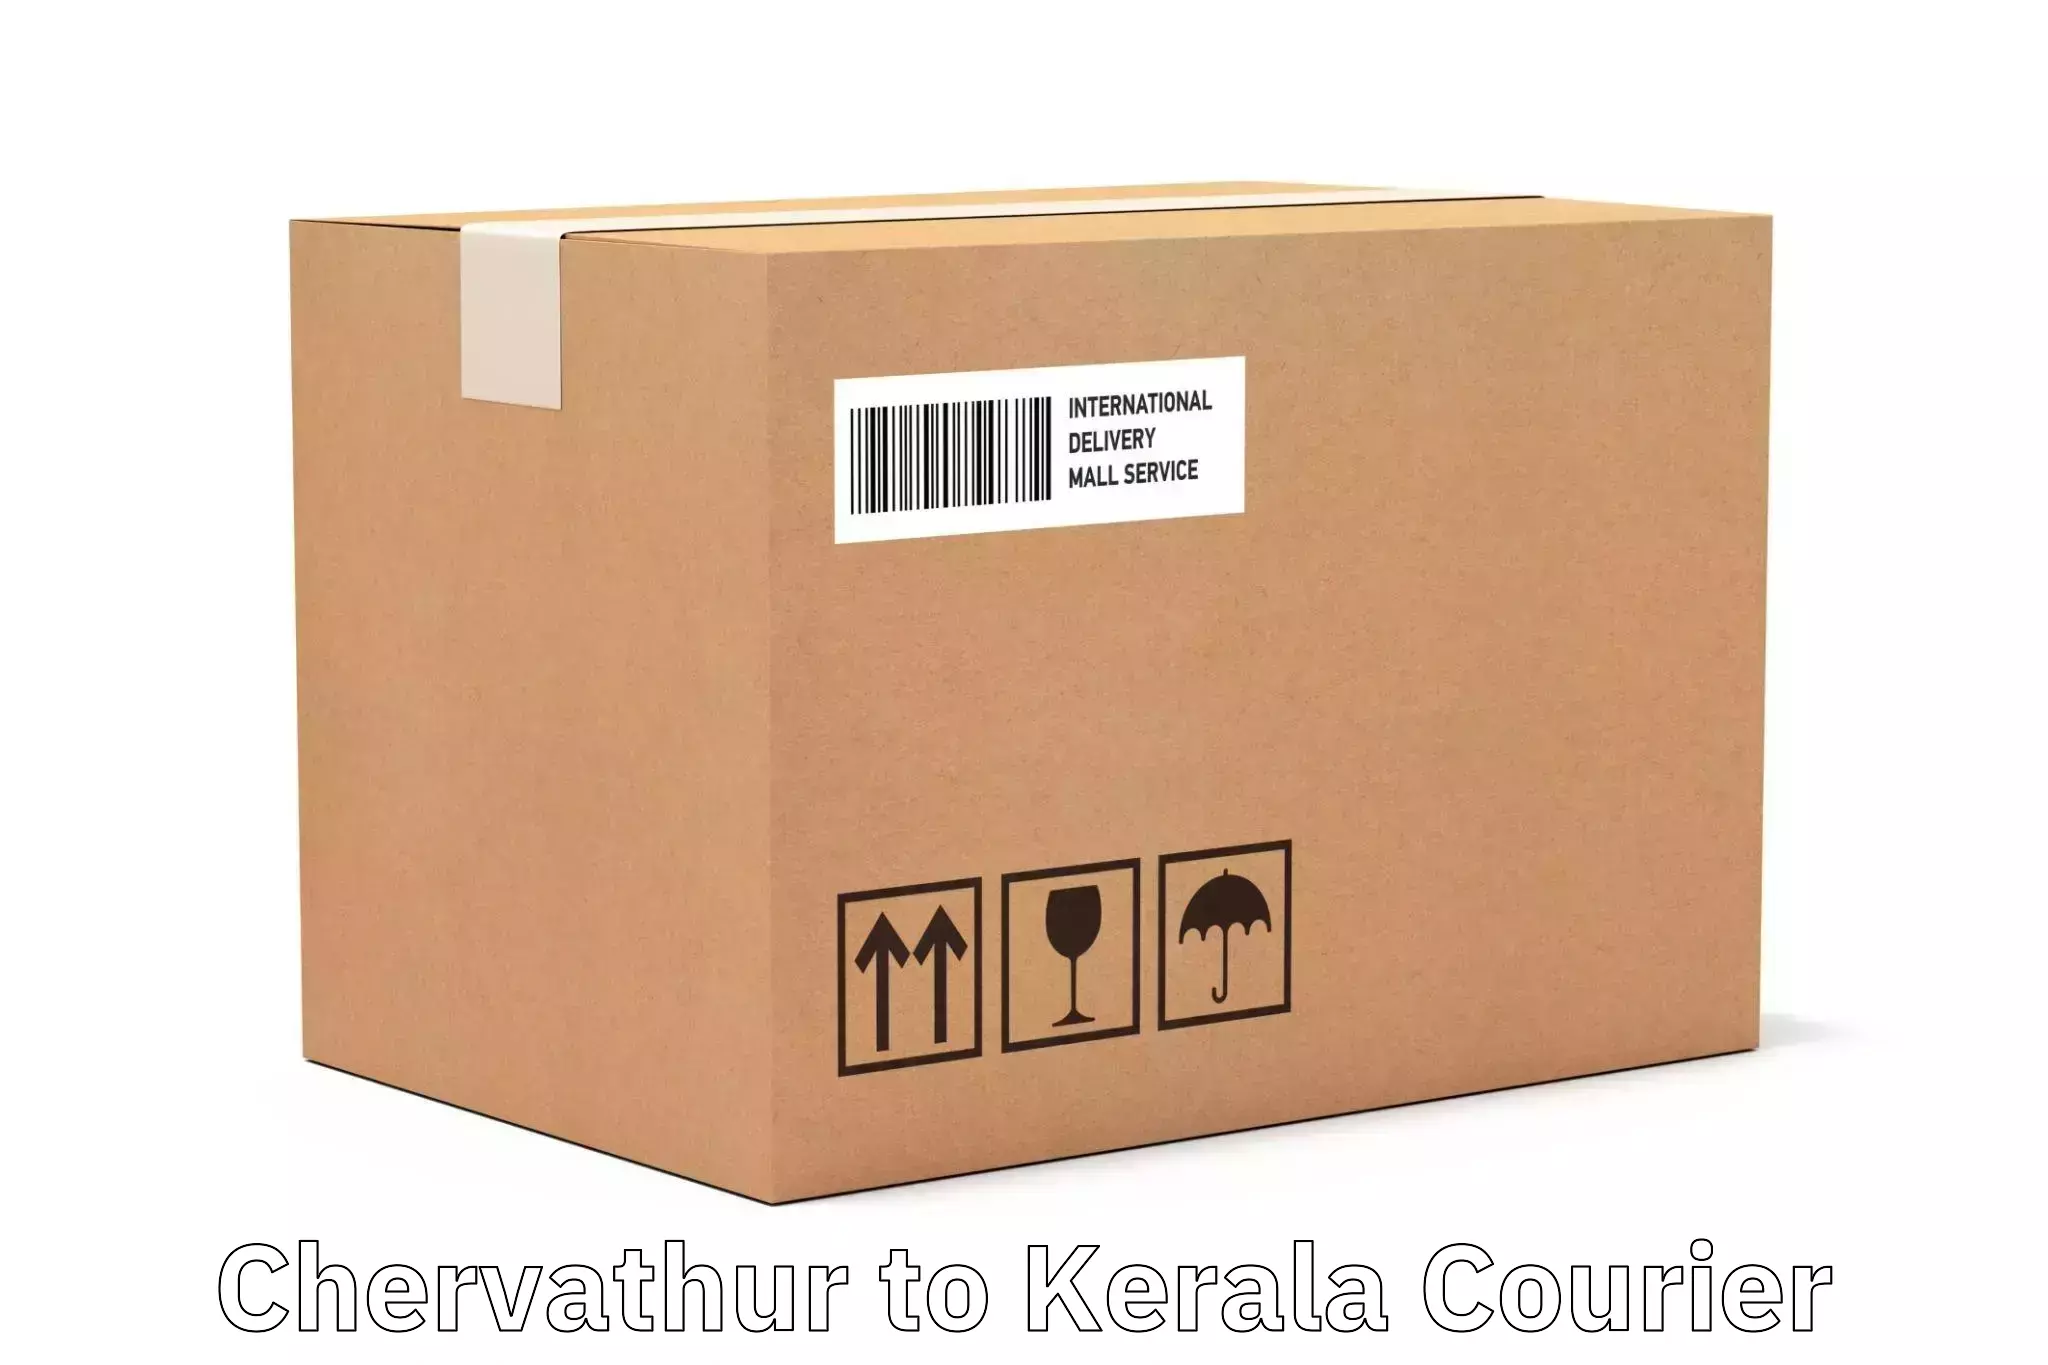 Reliable logistics providers Chervathur to Kanjiramattom